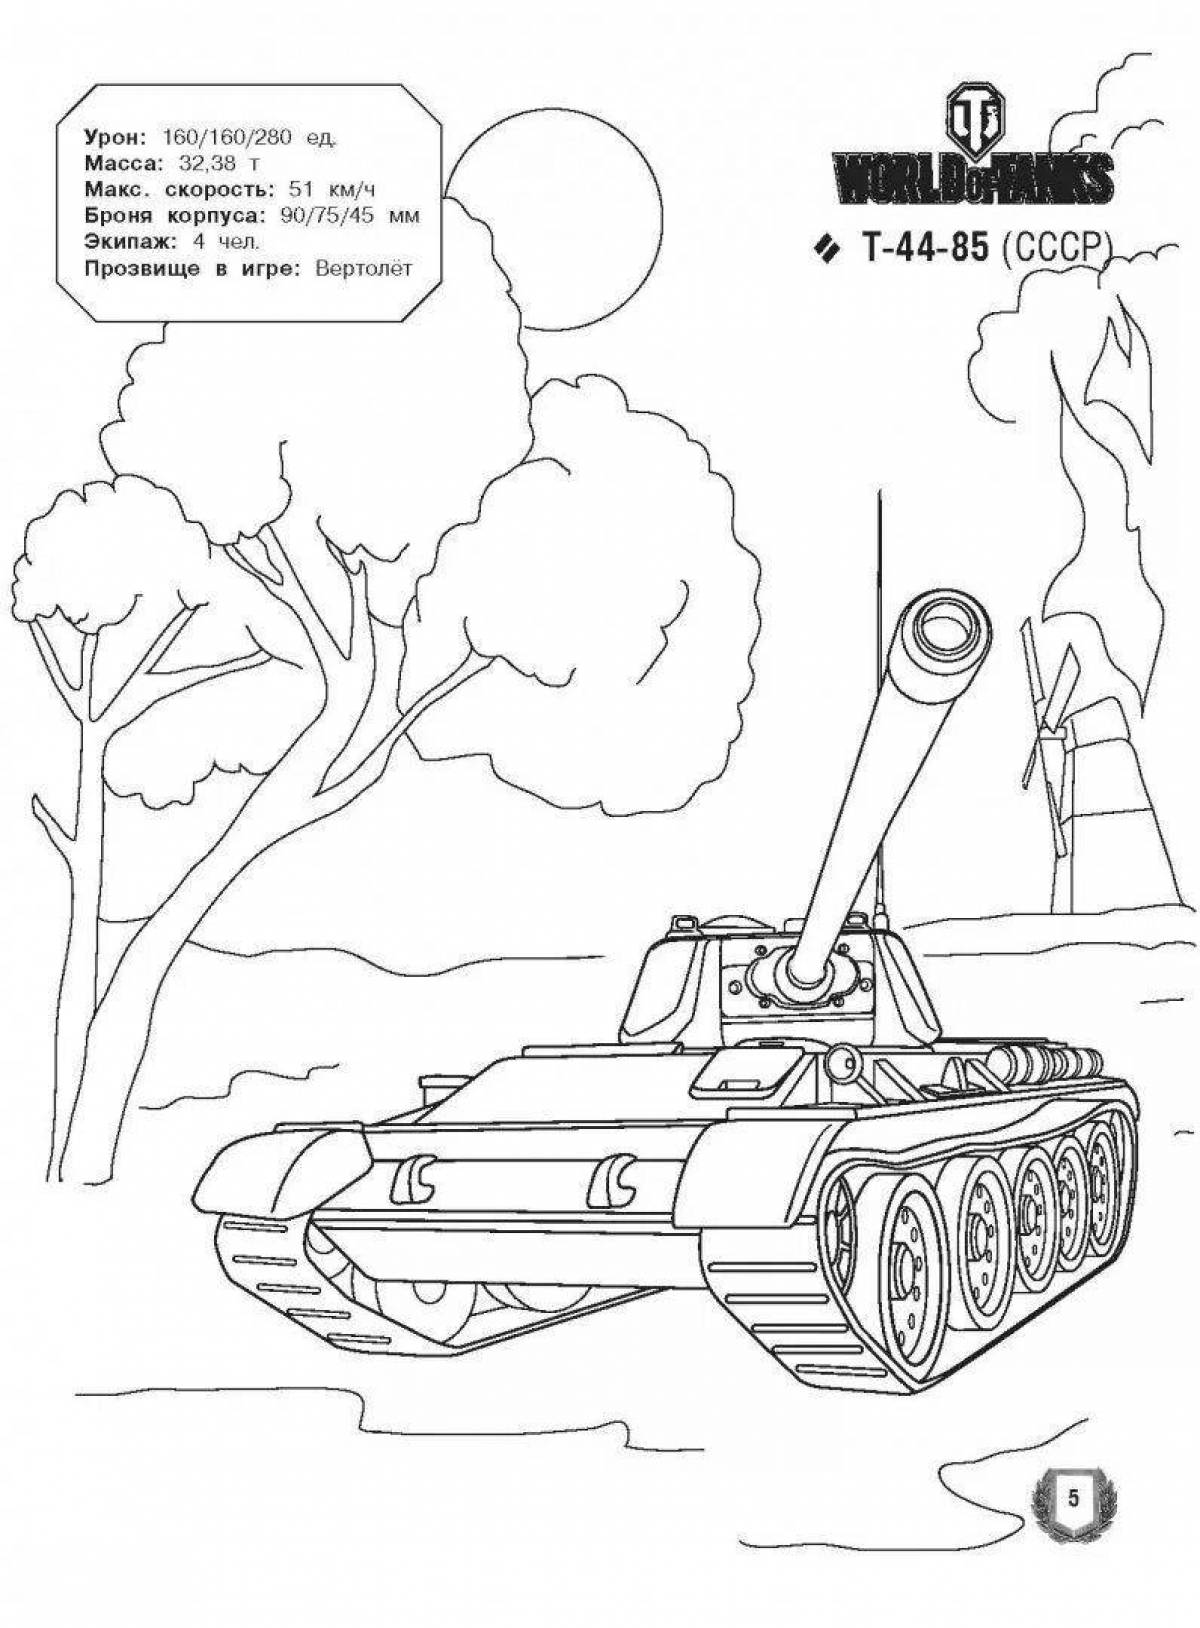 Impressive world of tanks coloring book